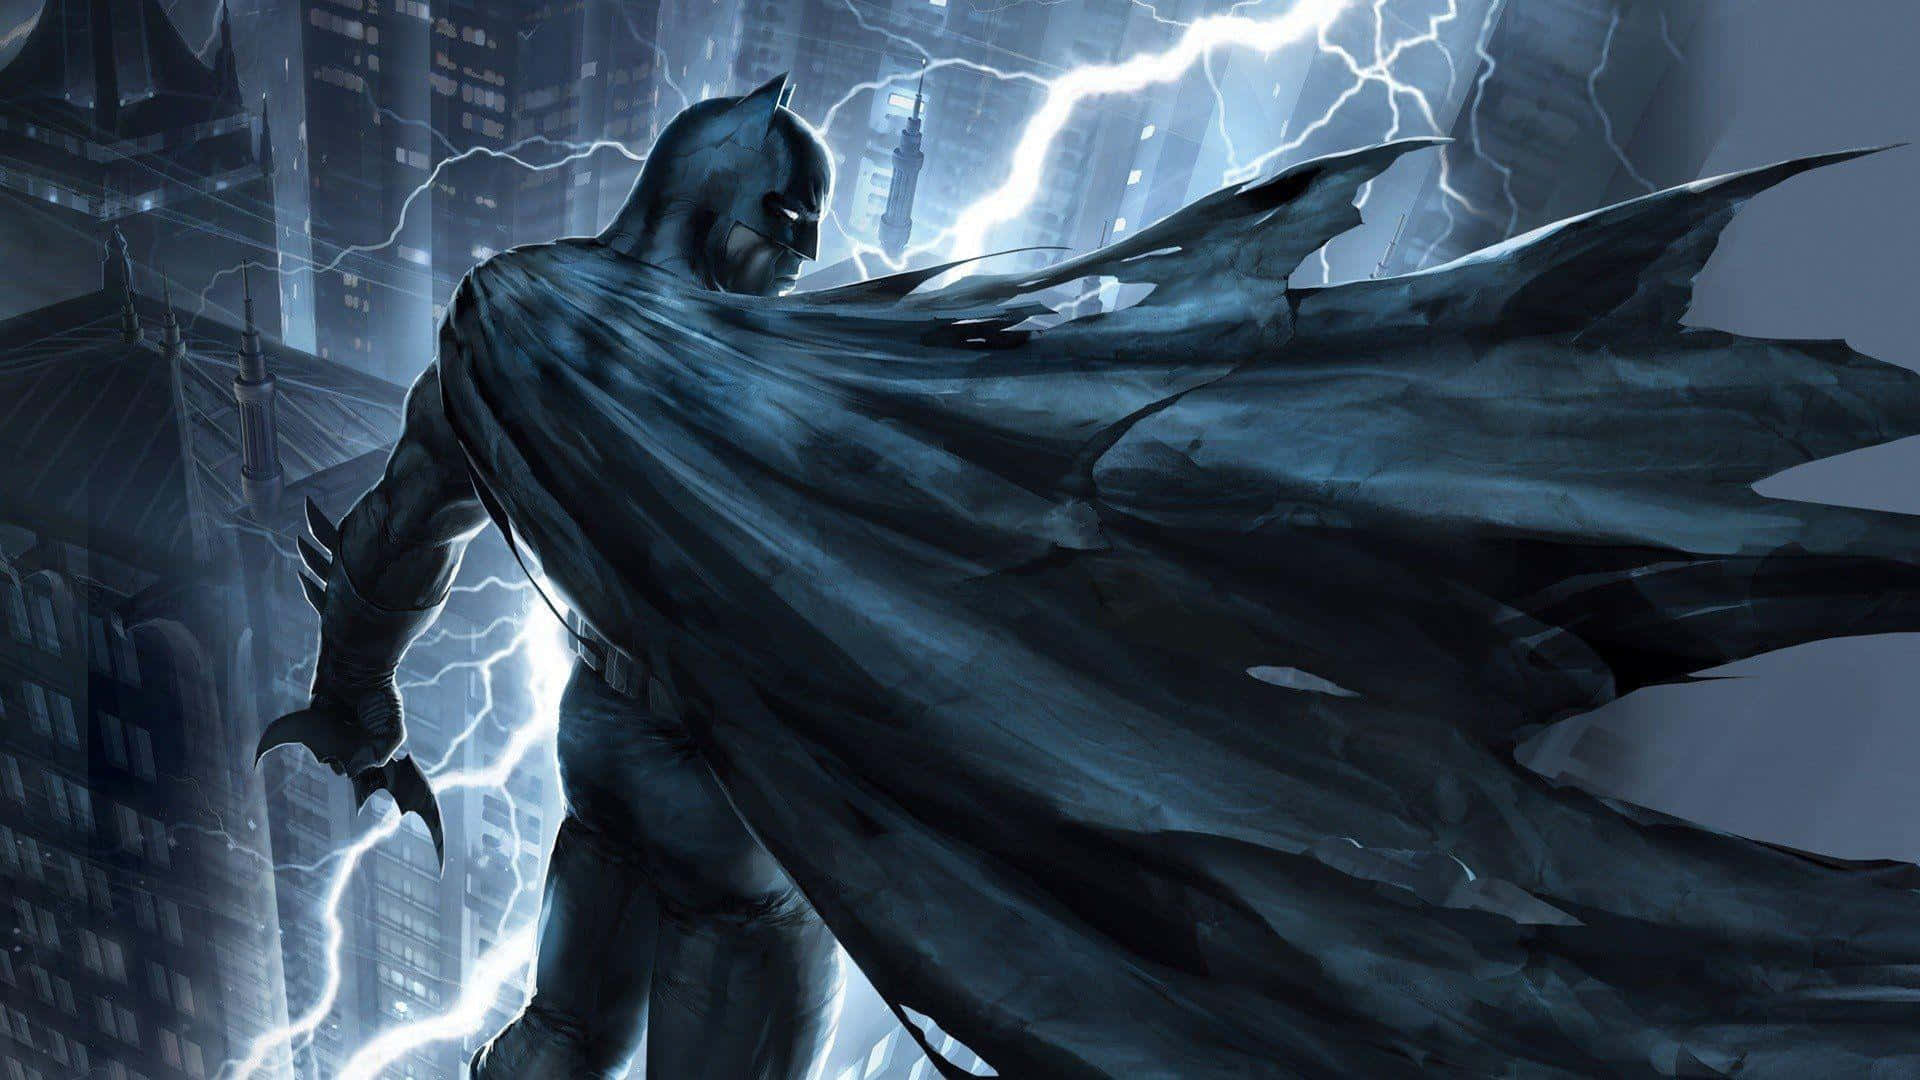 Batman Ready for Action in The Dark Knight Returns Wallpaper